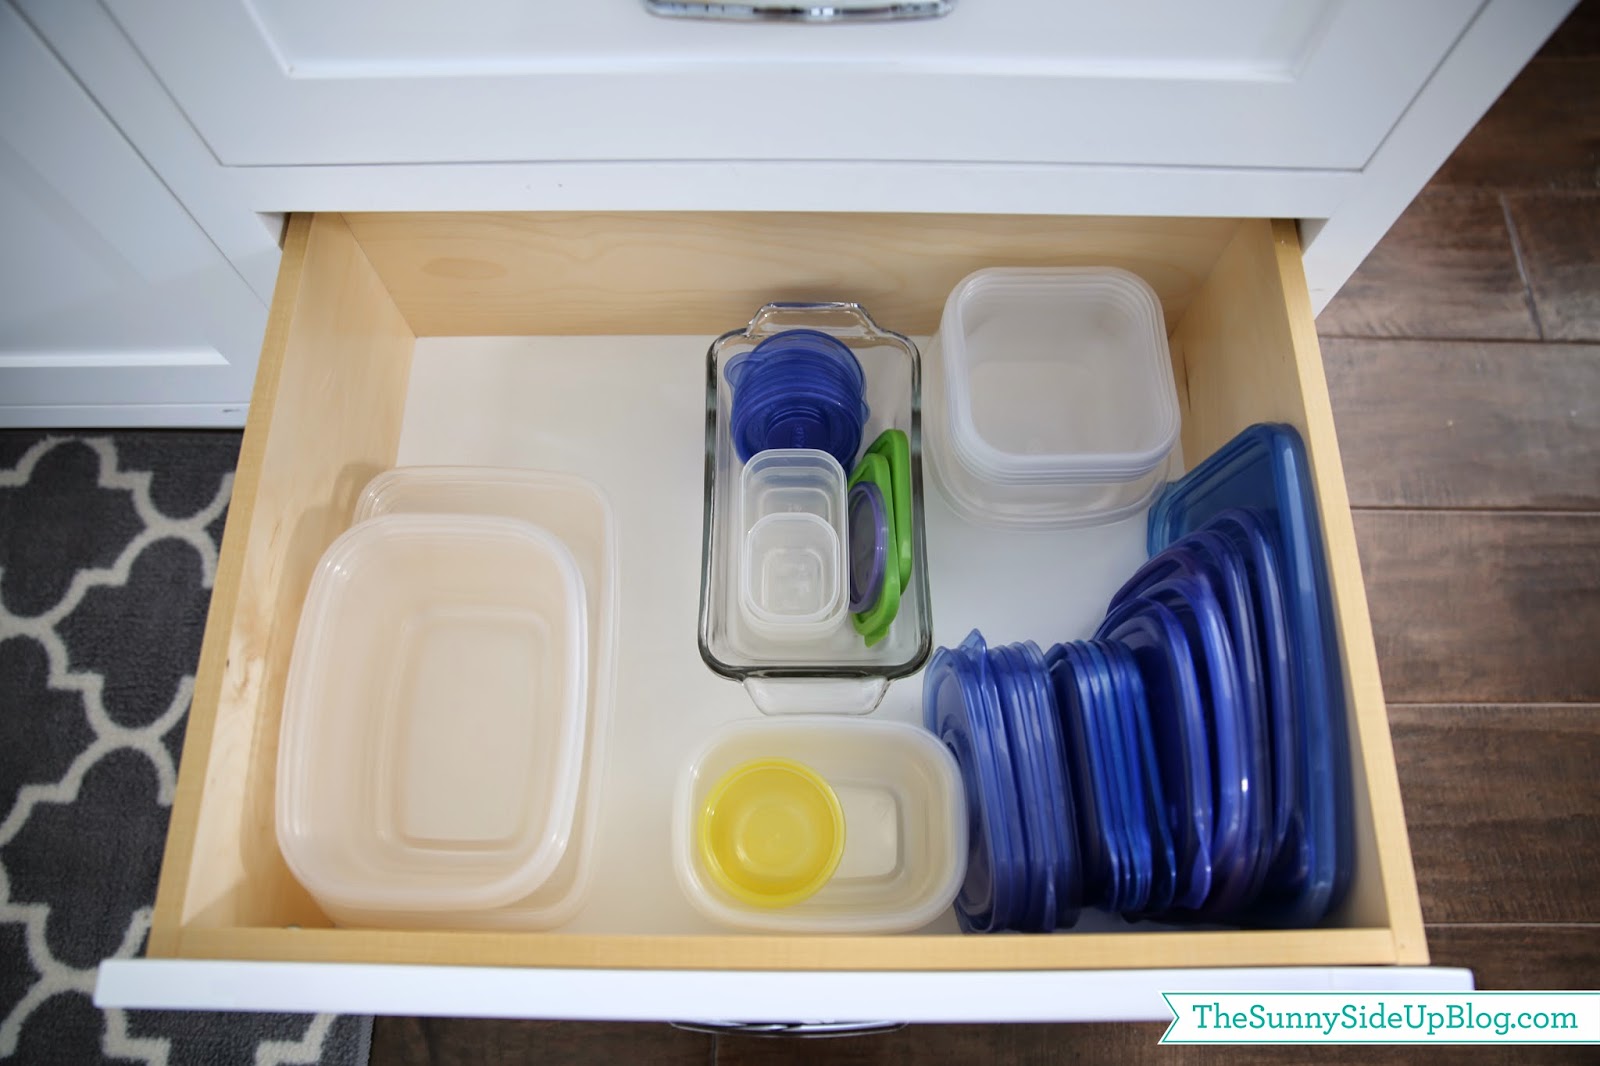 Organized kitchen drawers and fridge - The Sunny Side Up Blog